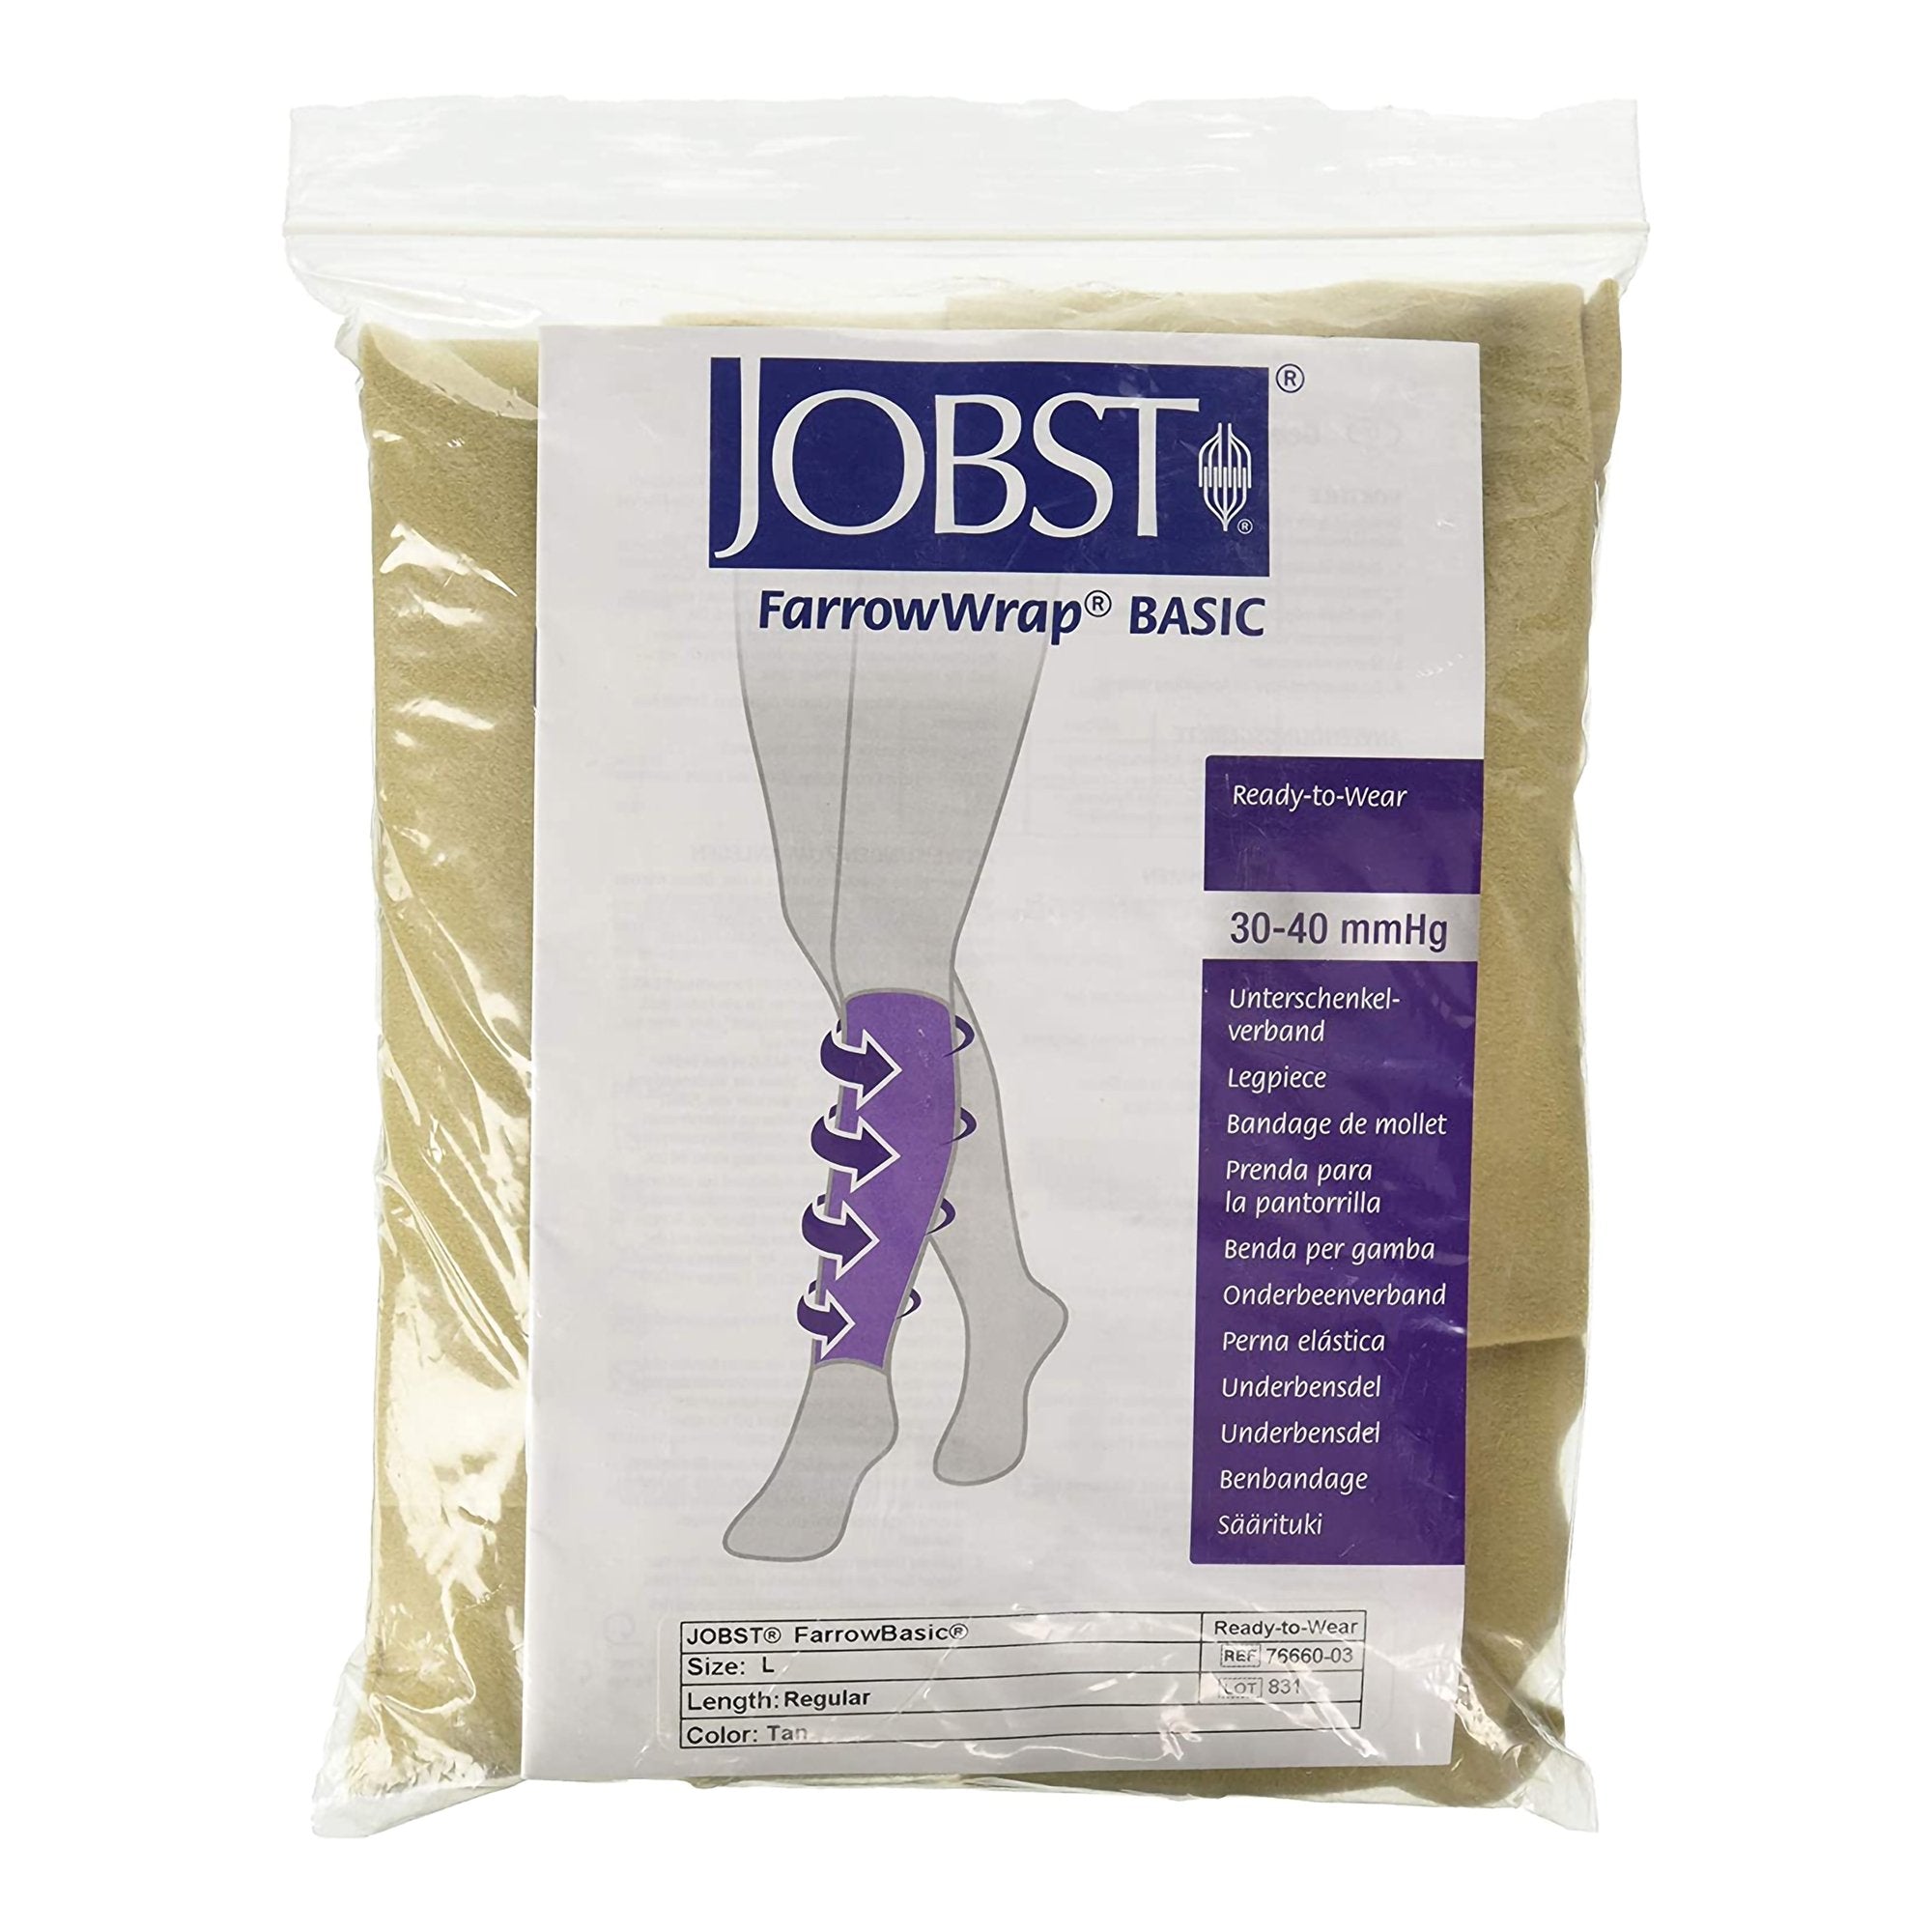 JOBST FarrowWrap Basic Compression Wrap, Large, Tan Leg -Each